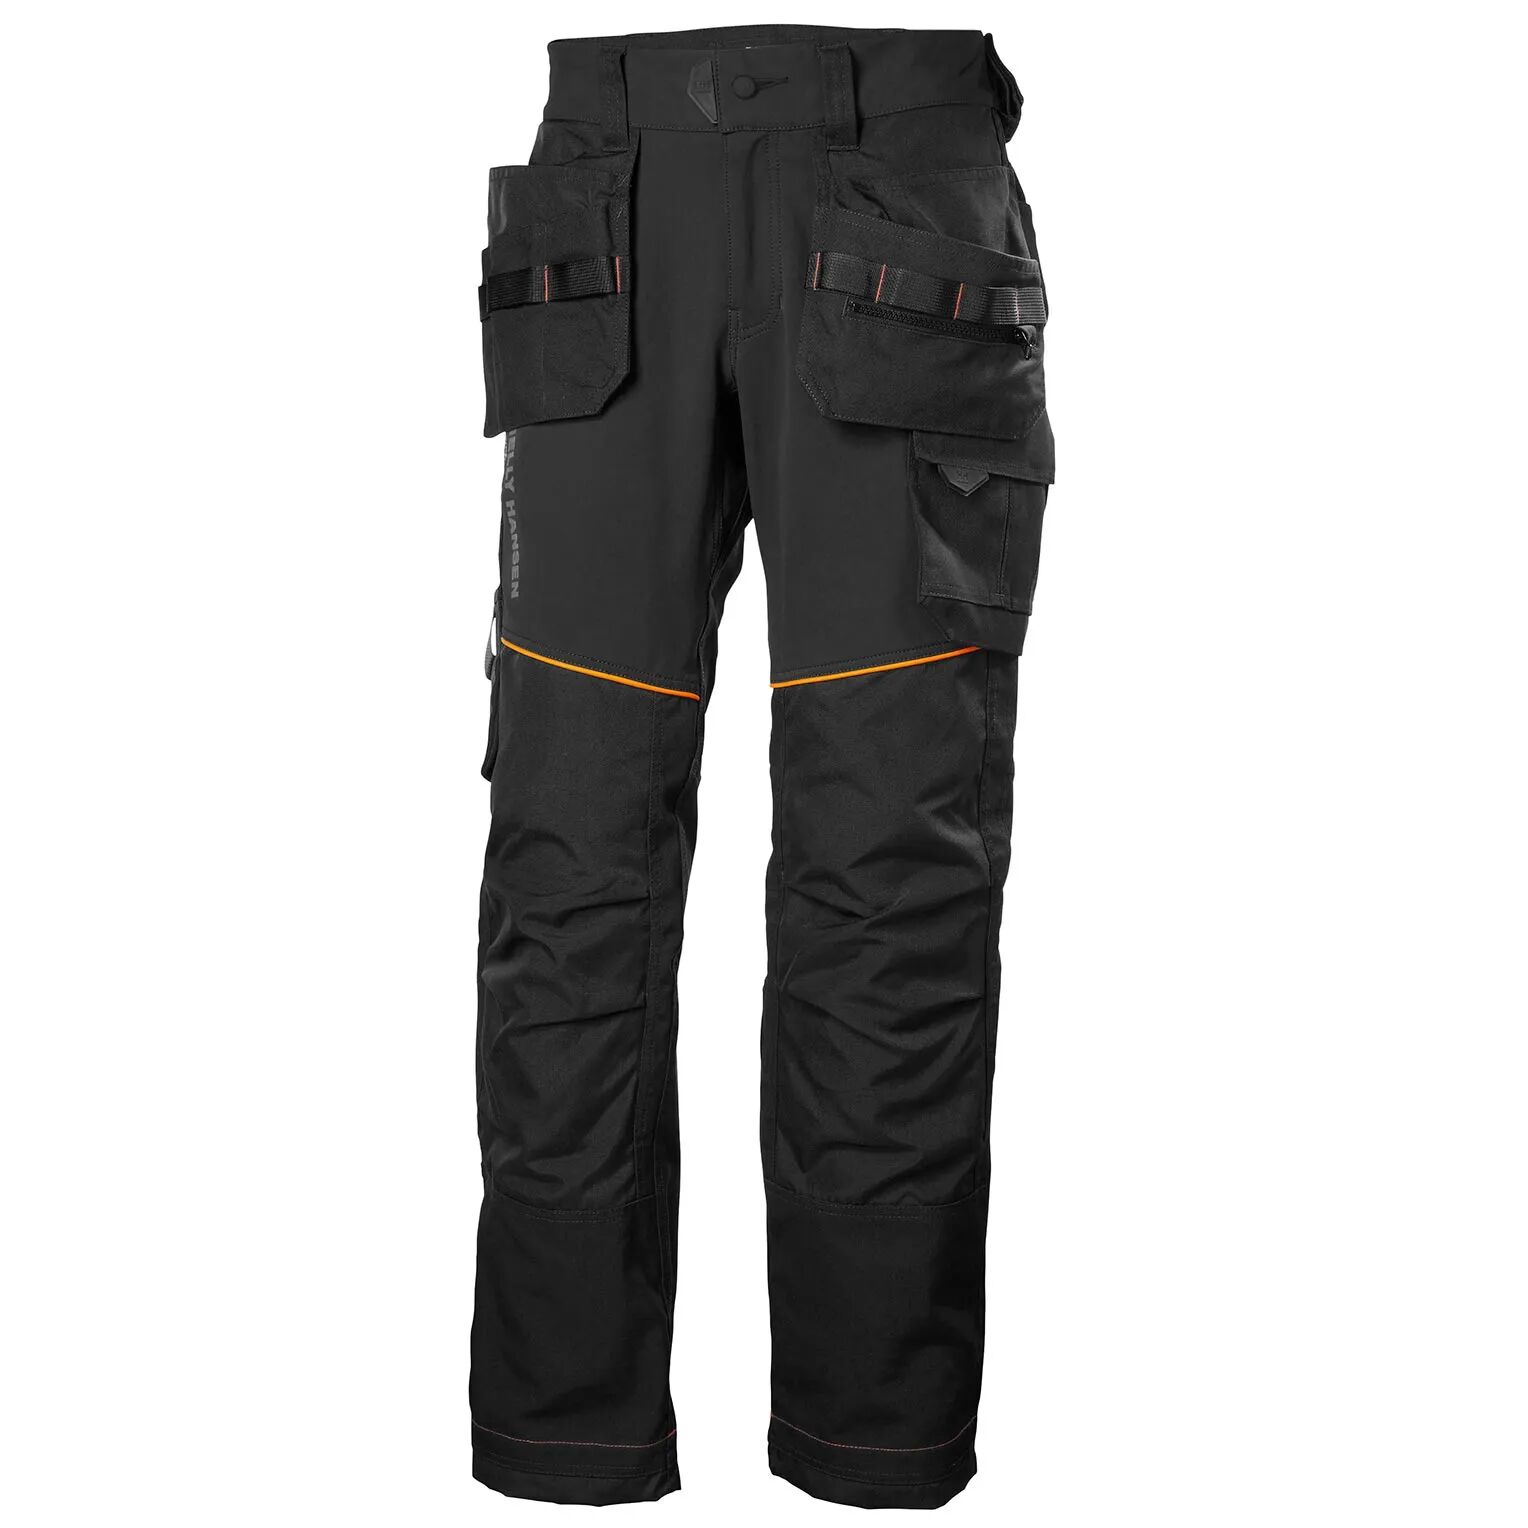 HH Workwear Helly Hansen WorkwearChelsea Evolution Construction Pants Black 34/30